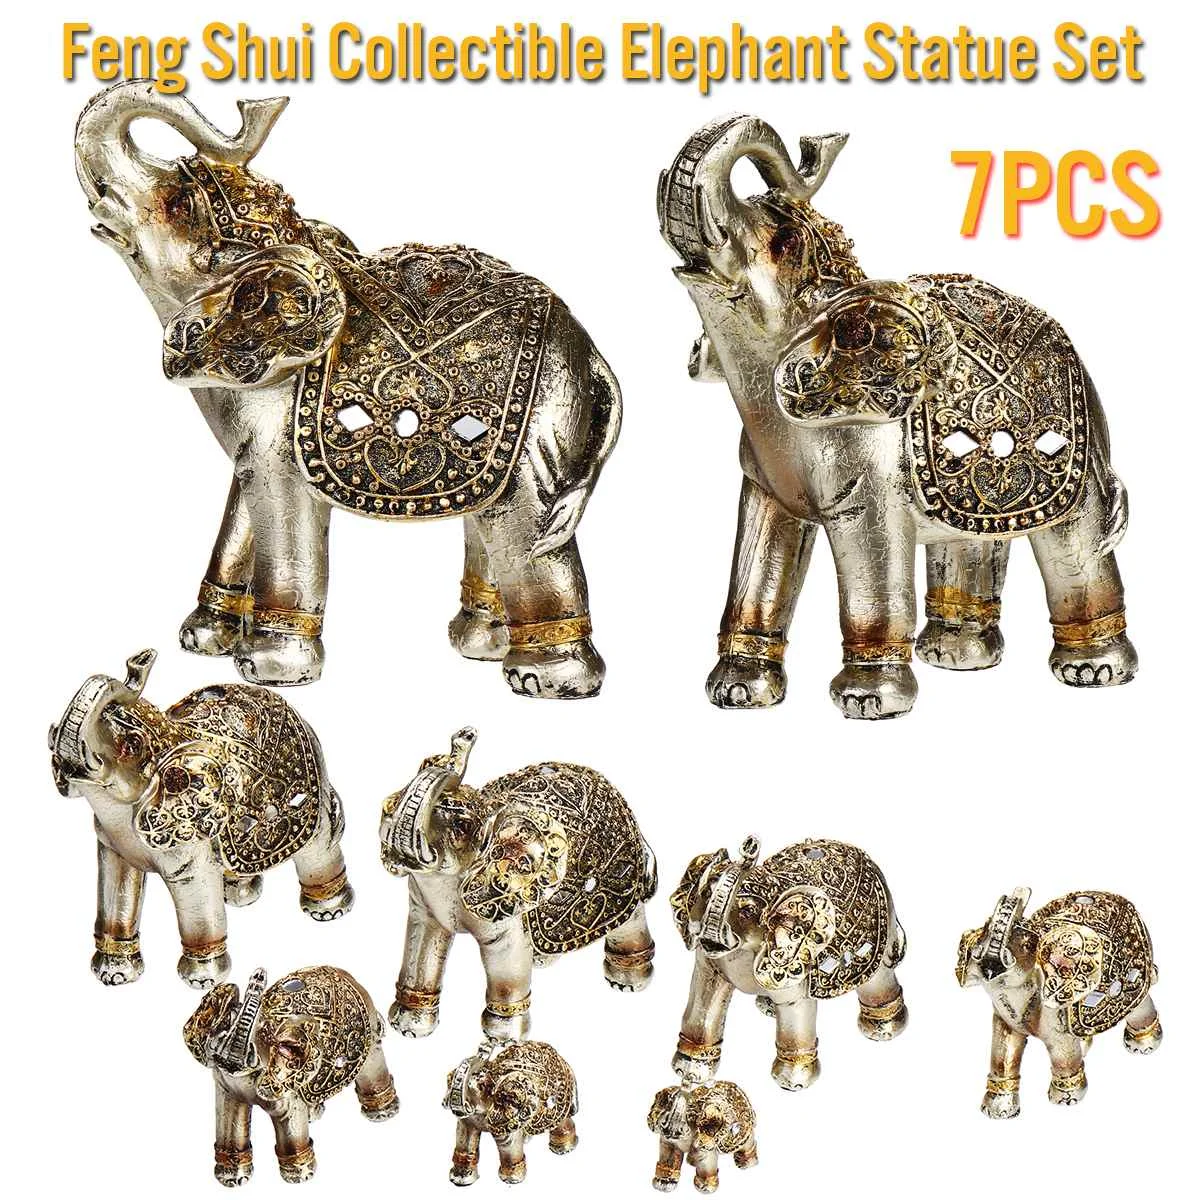 

7PCS Golden Elephant Figurines Resin Garden Figures Lucky Elephant Statues Sculpture Collectible Gifts Home Decor